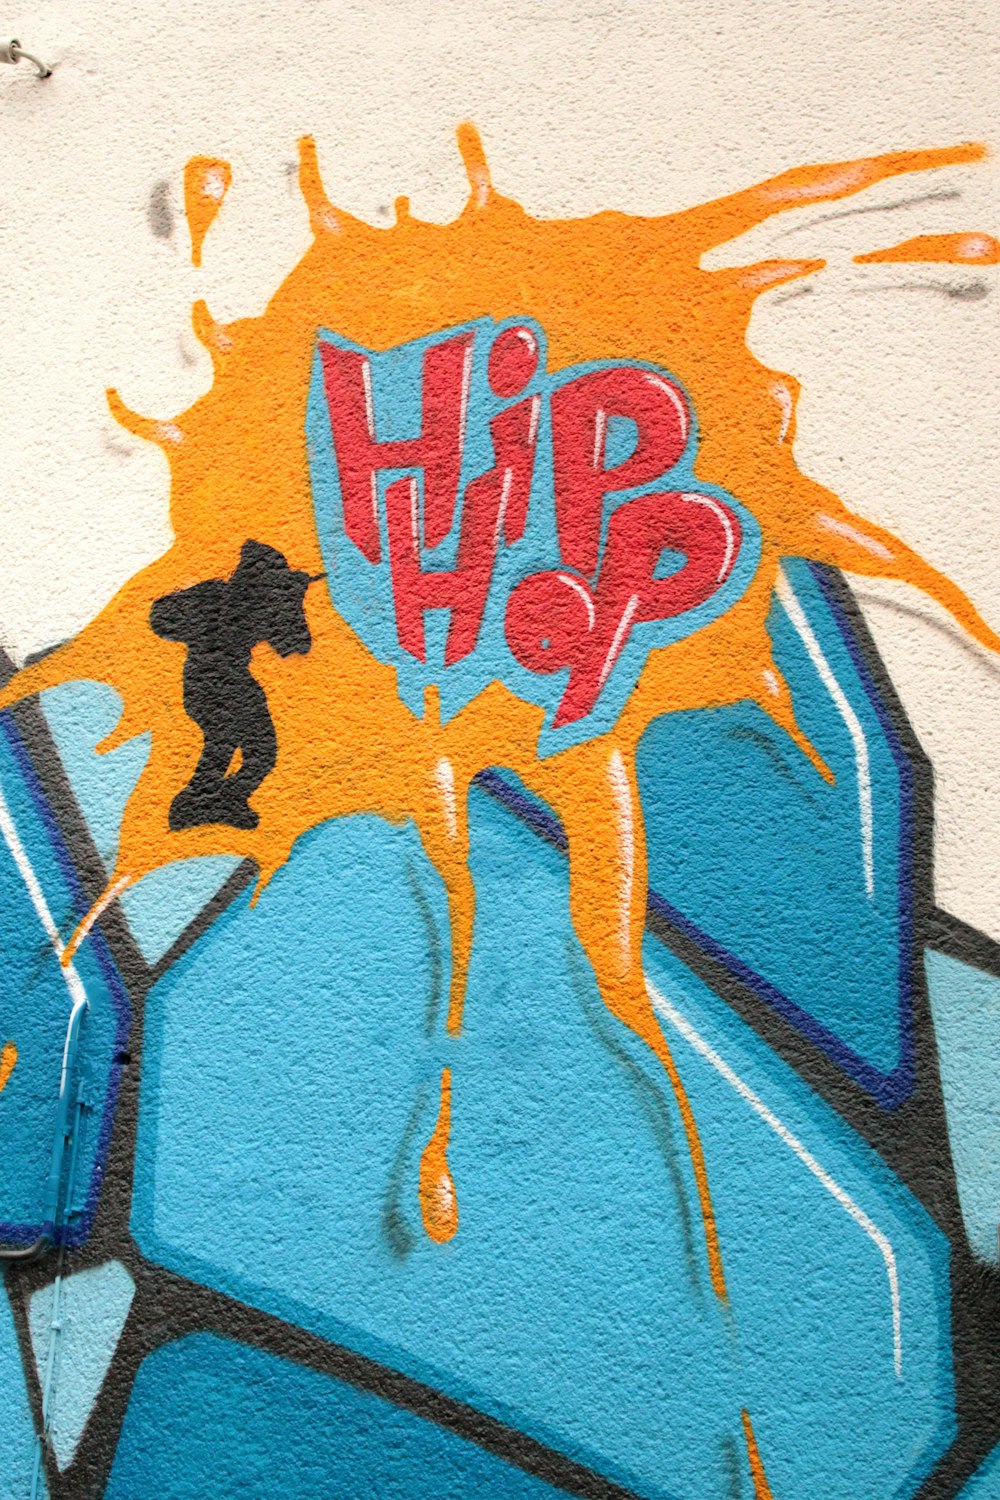 Graffiti hip hop